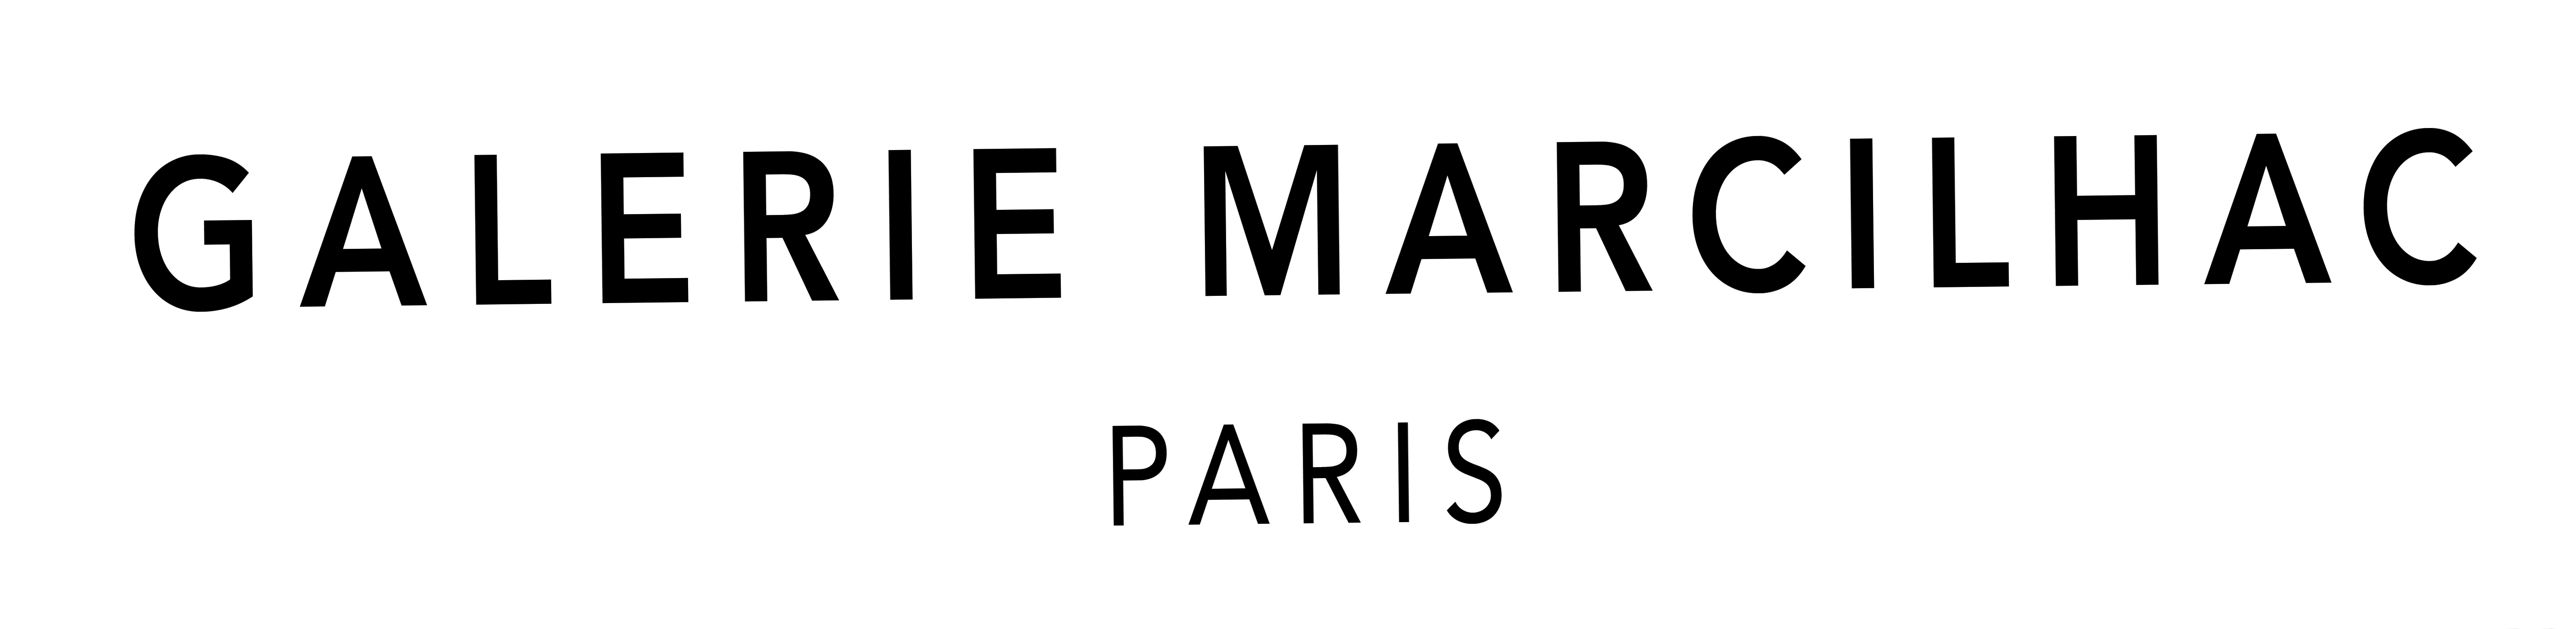 Galerie Marcilhac company logo